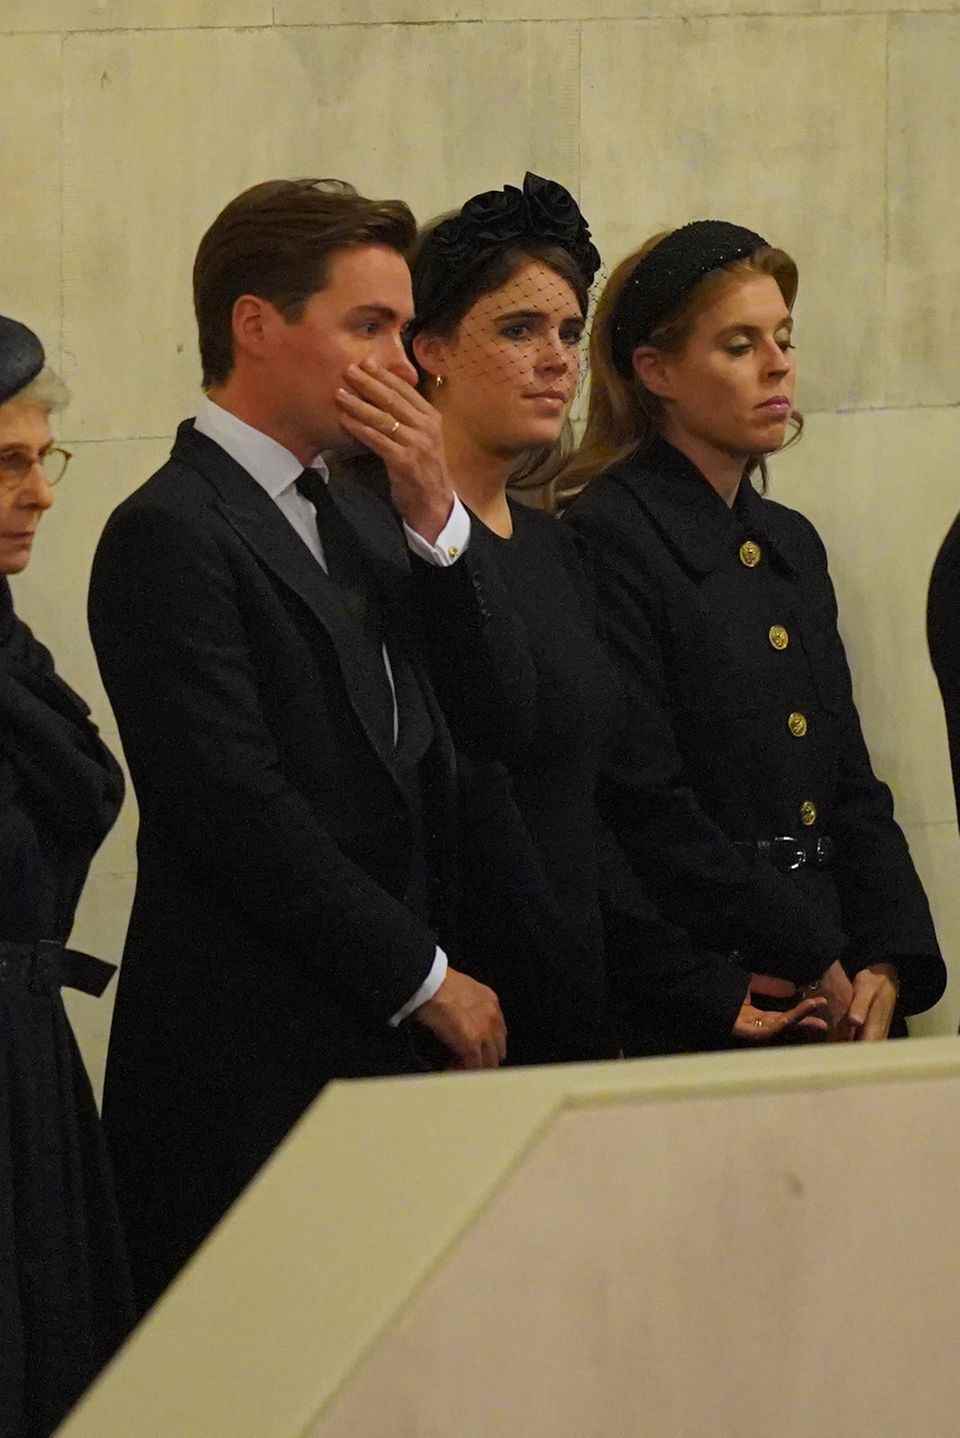 Edoardo Mapelli Mozzi cries for the Queen